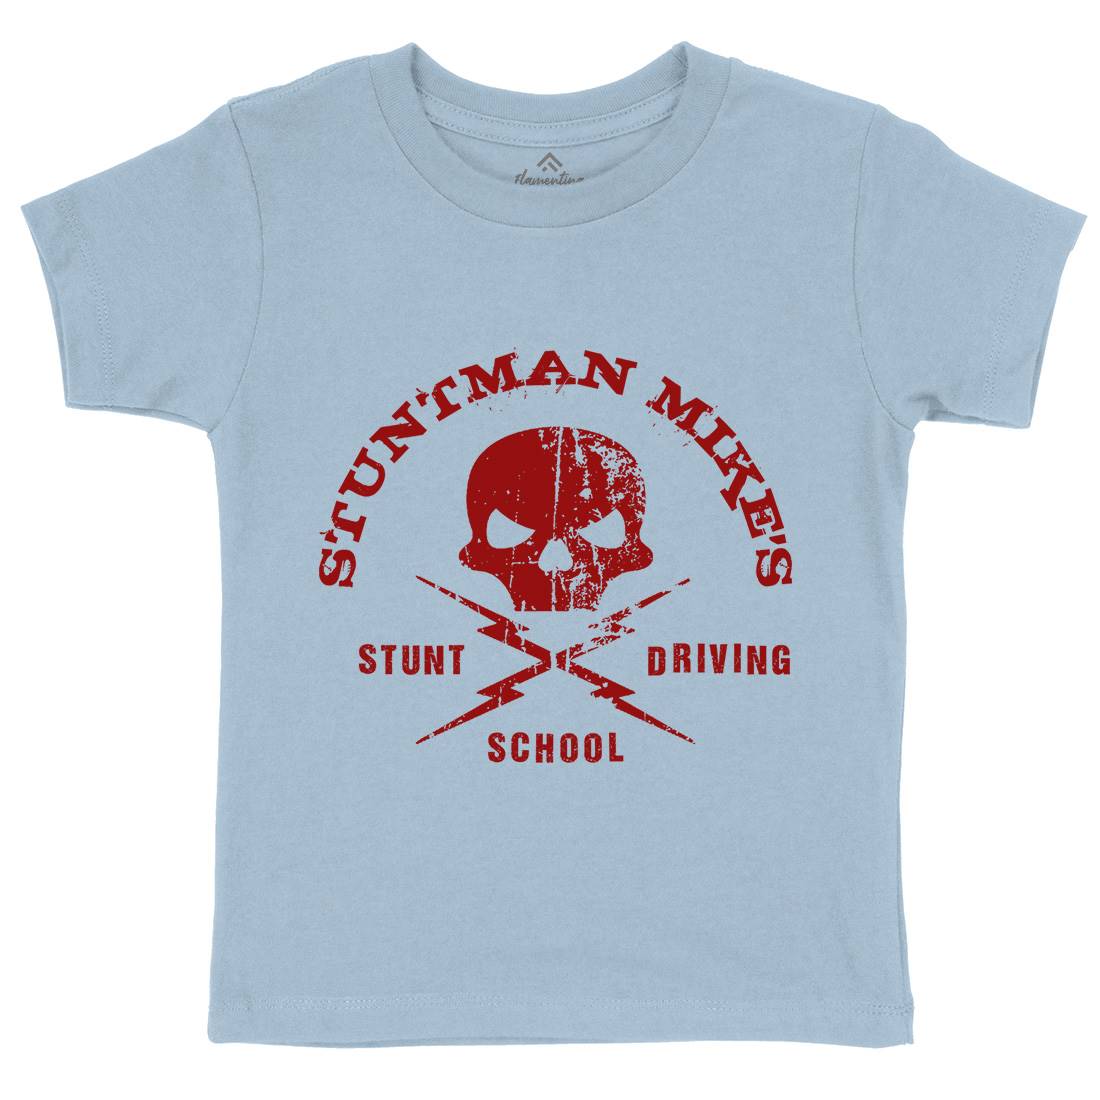 Stuntman Mike Kids Crew Neck T-Shirt Cars D322